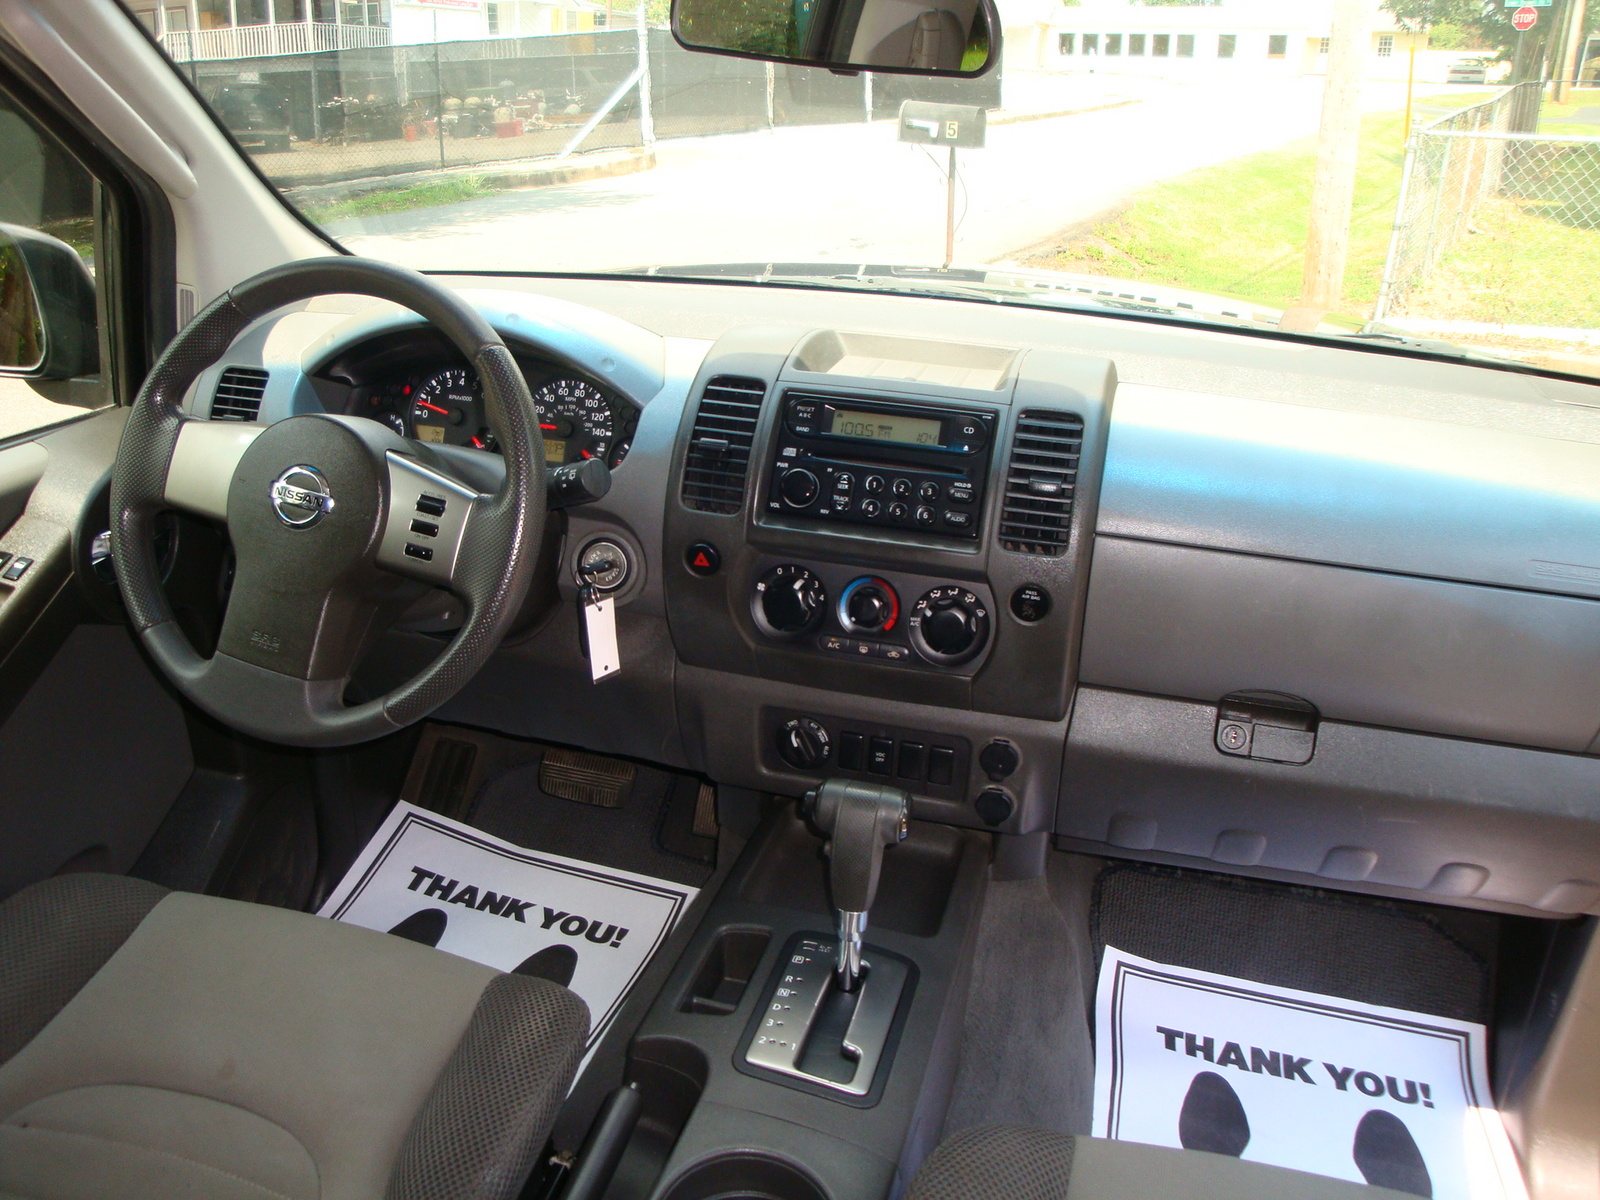 2006 Nissan xterra interior dimensions #4